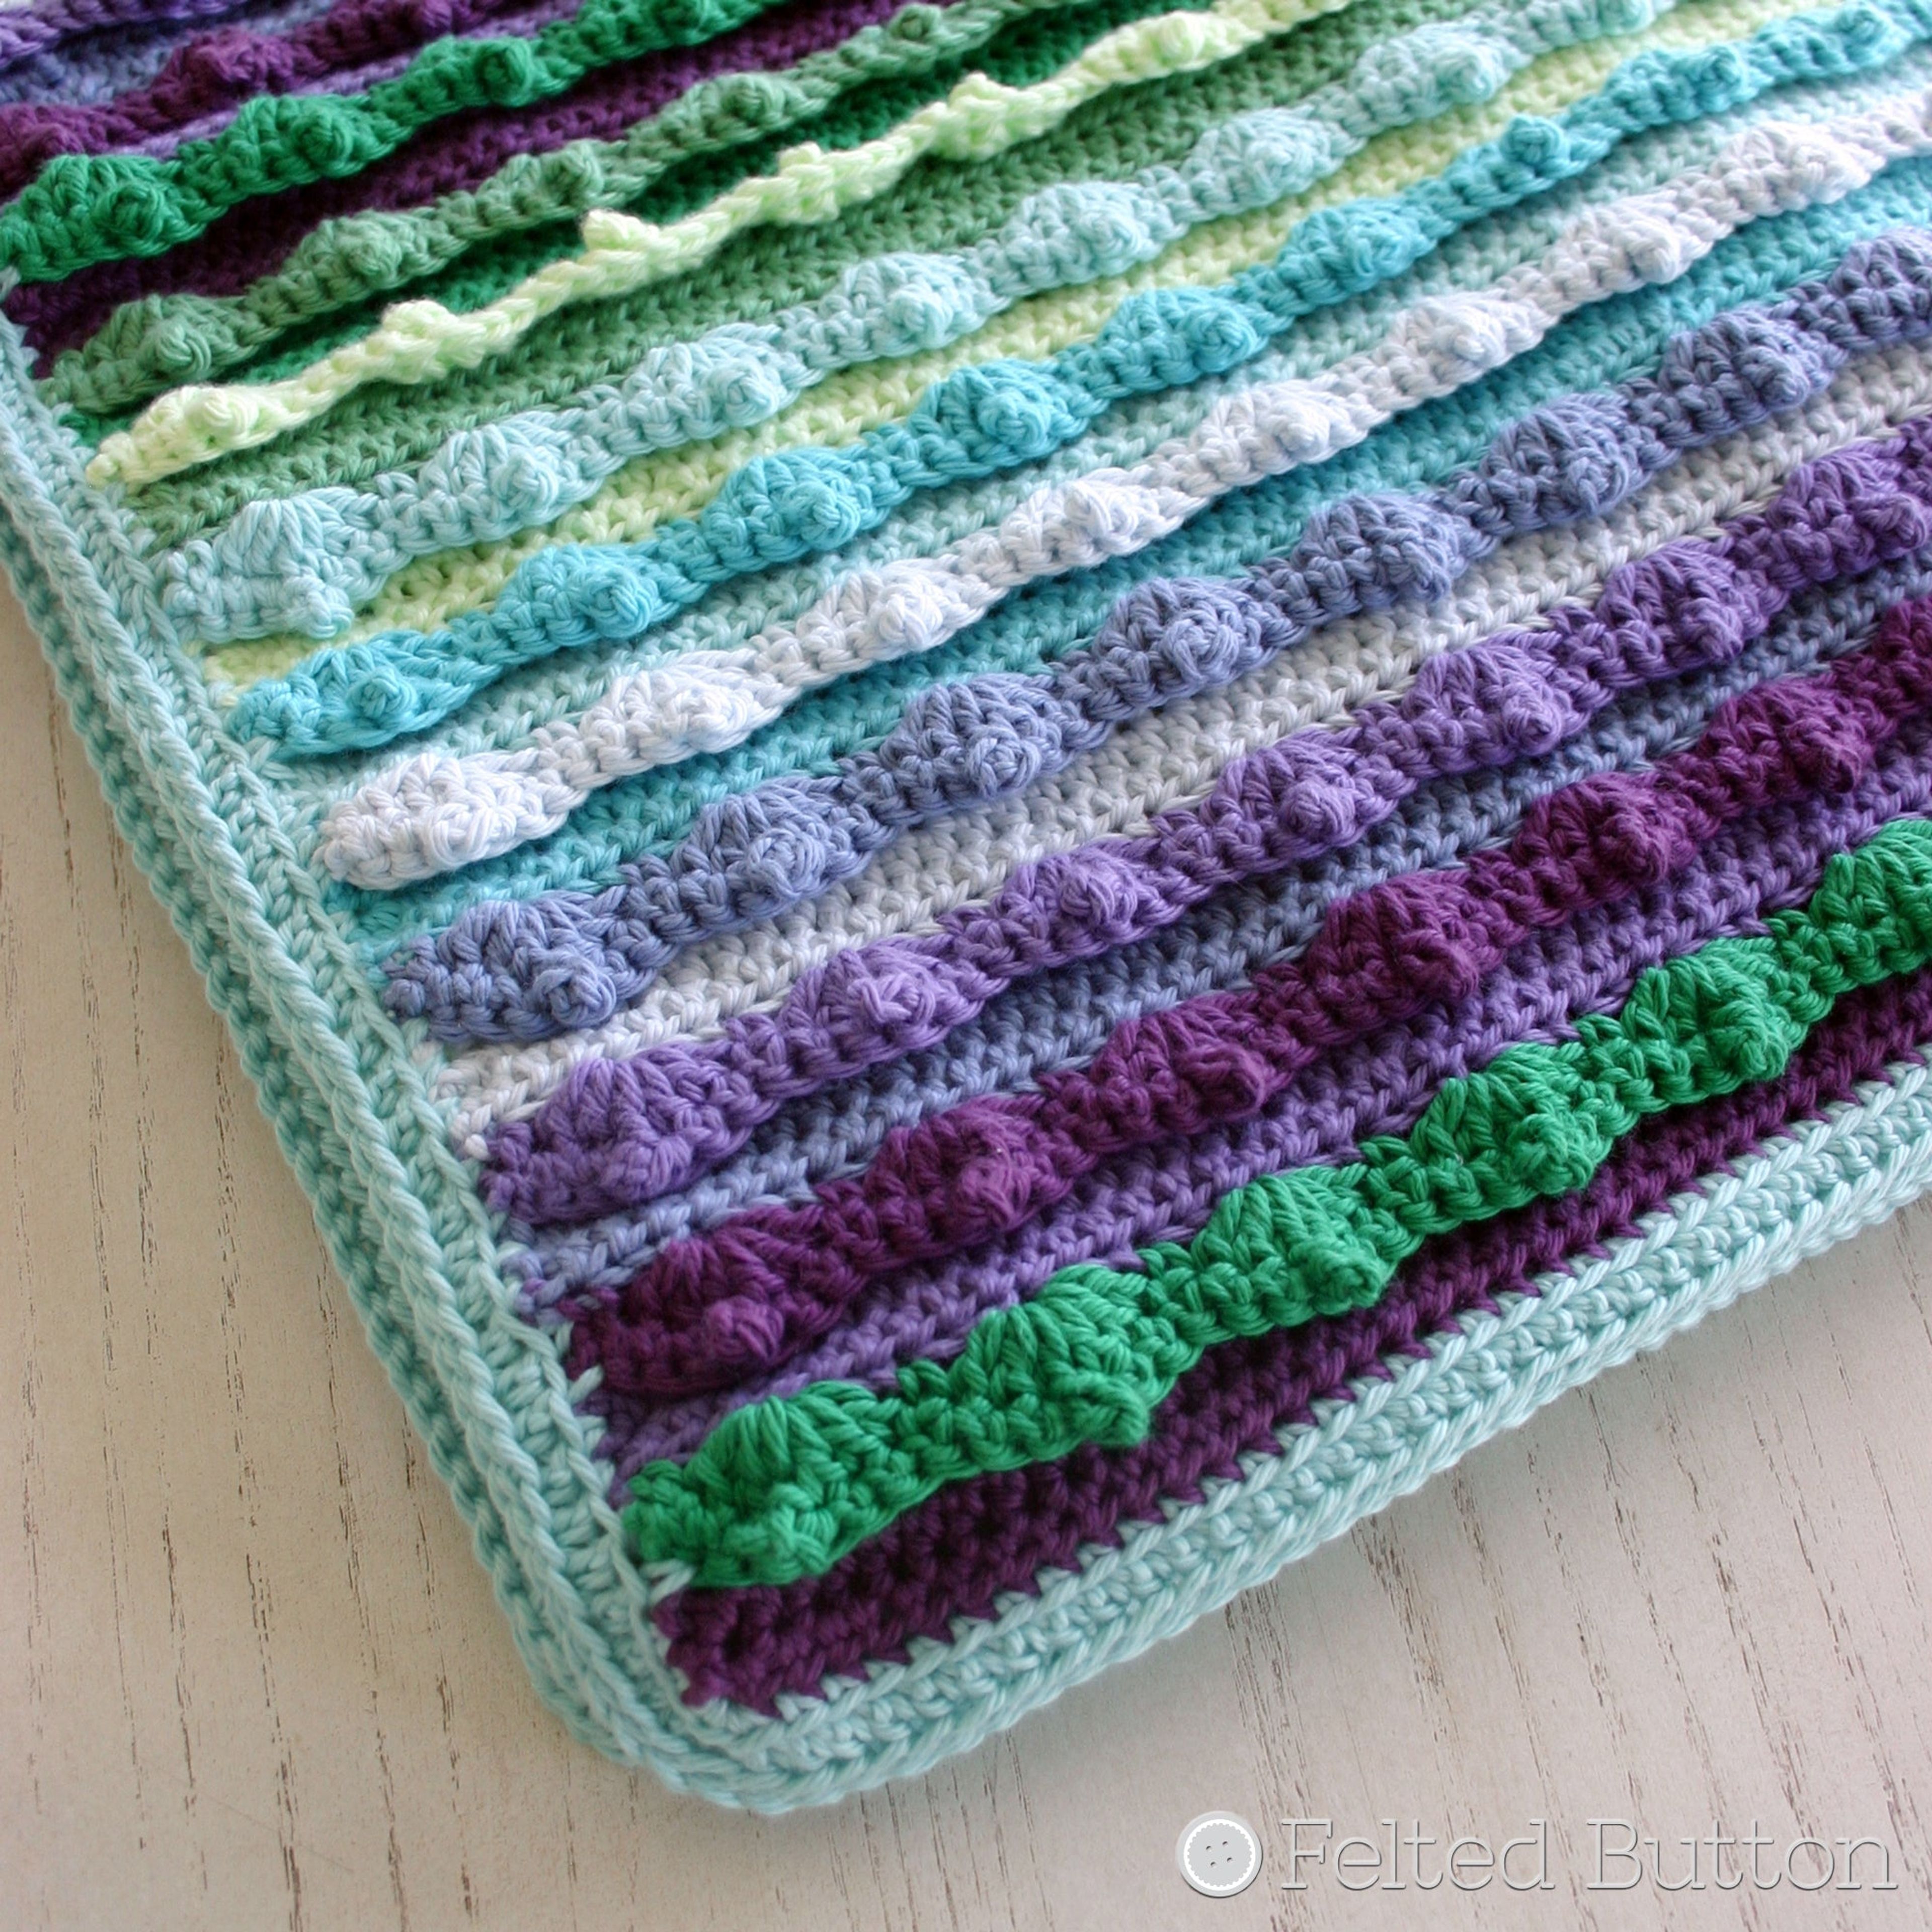 Eventide Blanket | Crochet Pattern | Felted Button